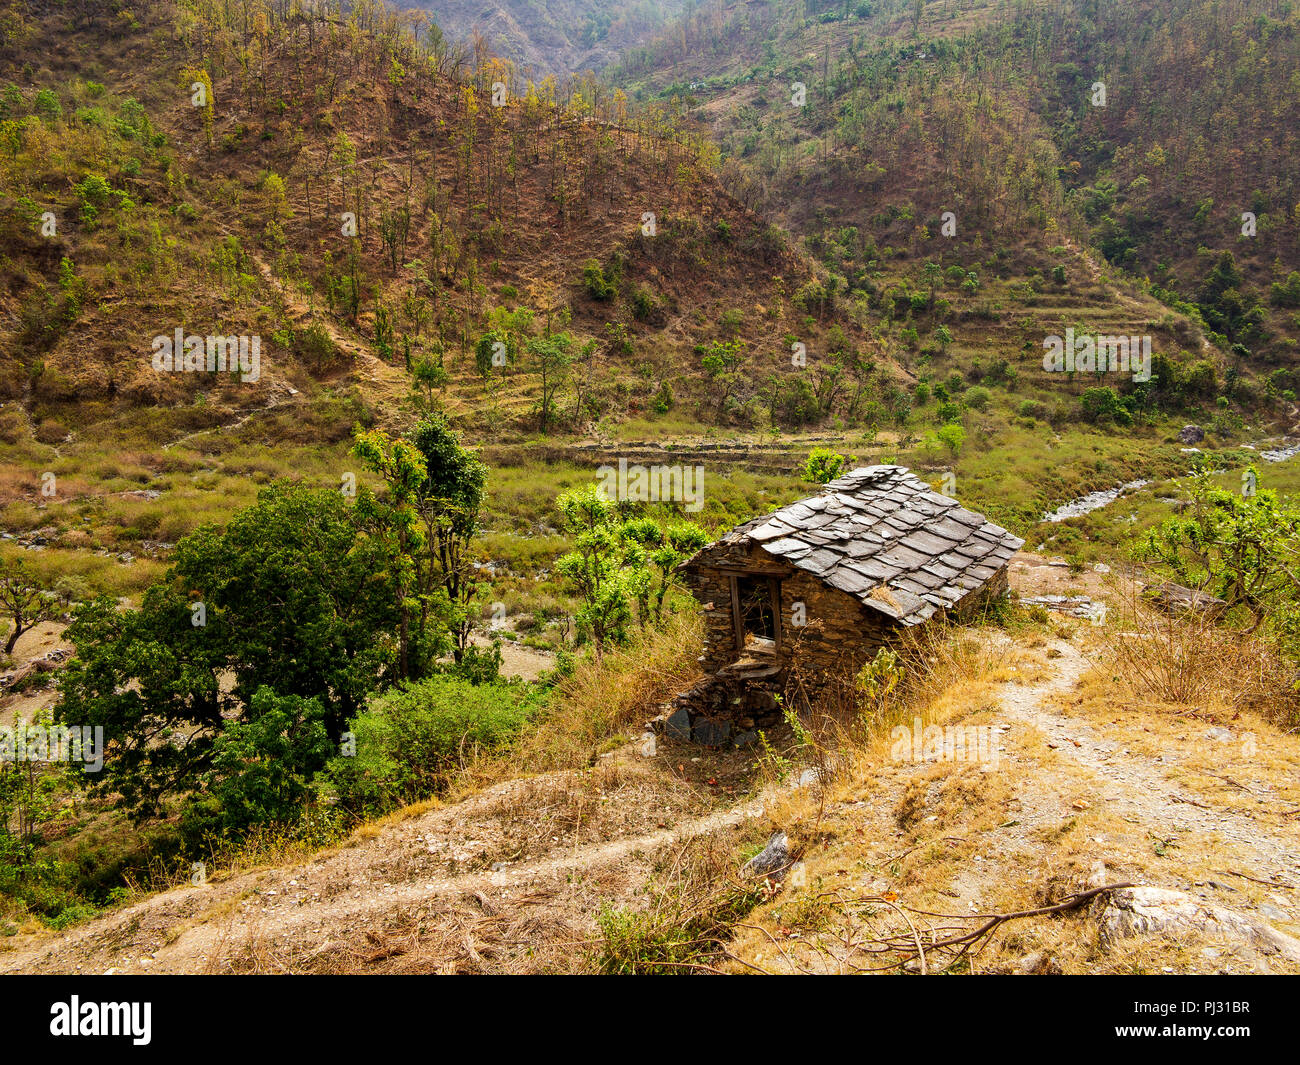 Abandoned tiled roof house at Dalkanya Village, Nandhour Valley, Kumaon Hills, Uttarakhand, India Stock Photo